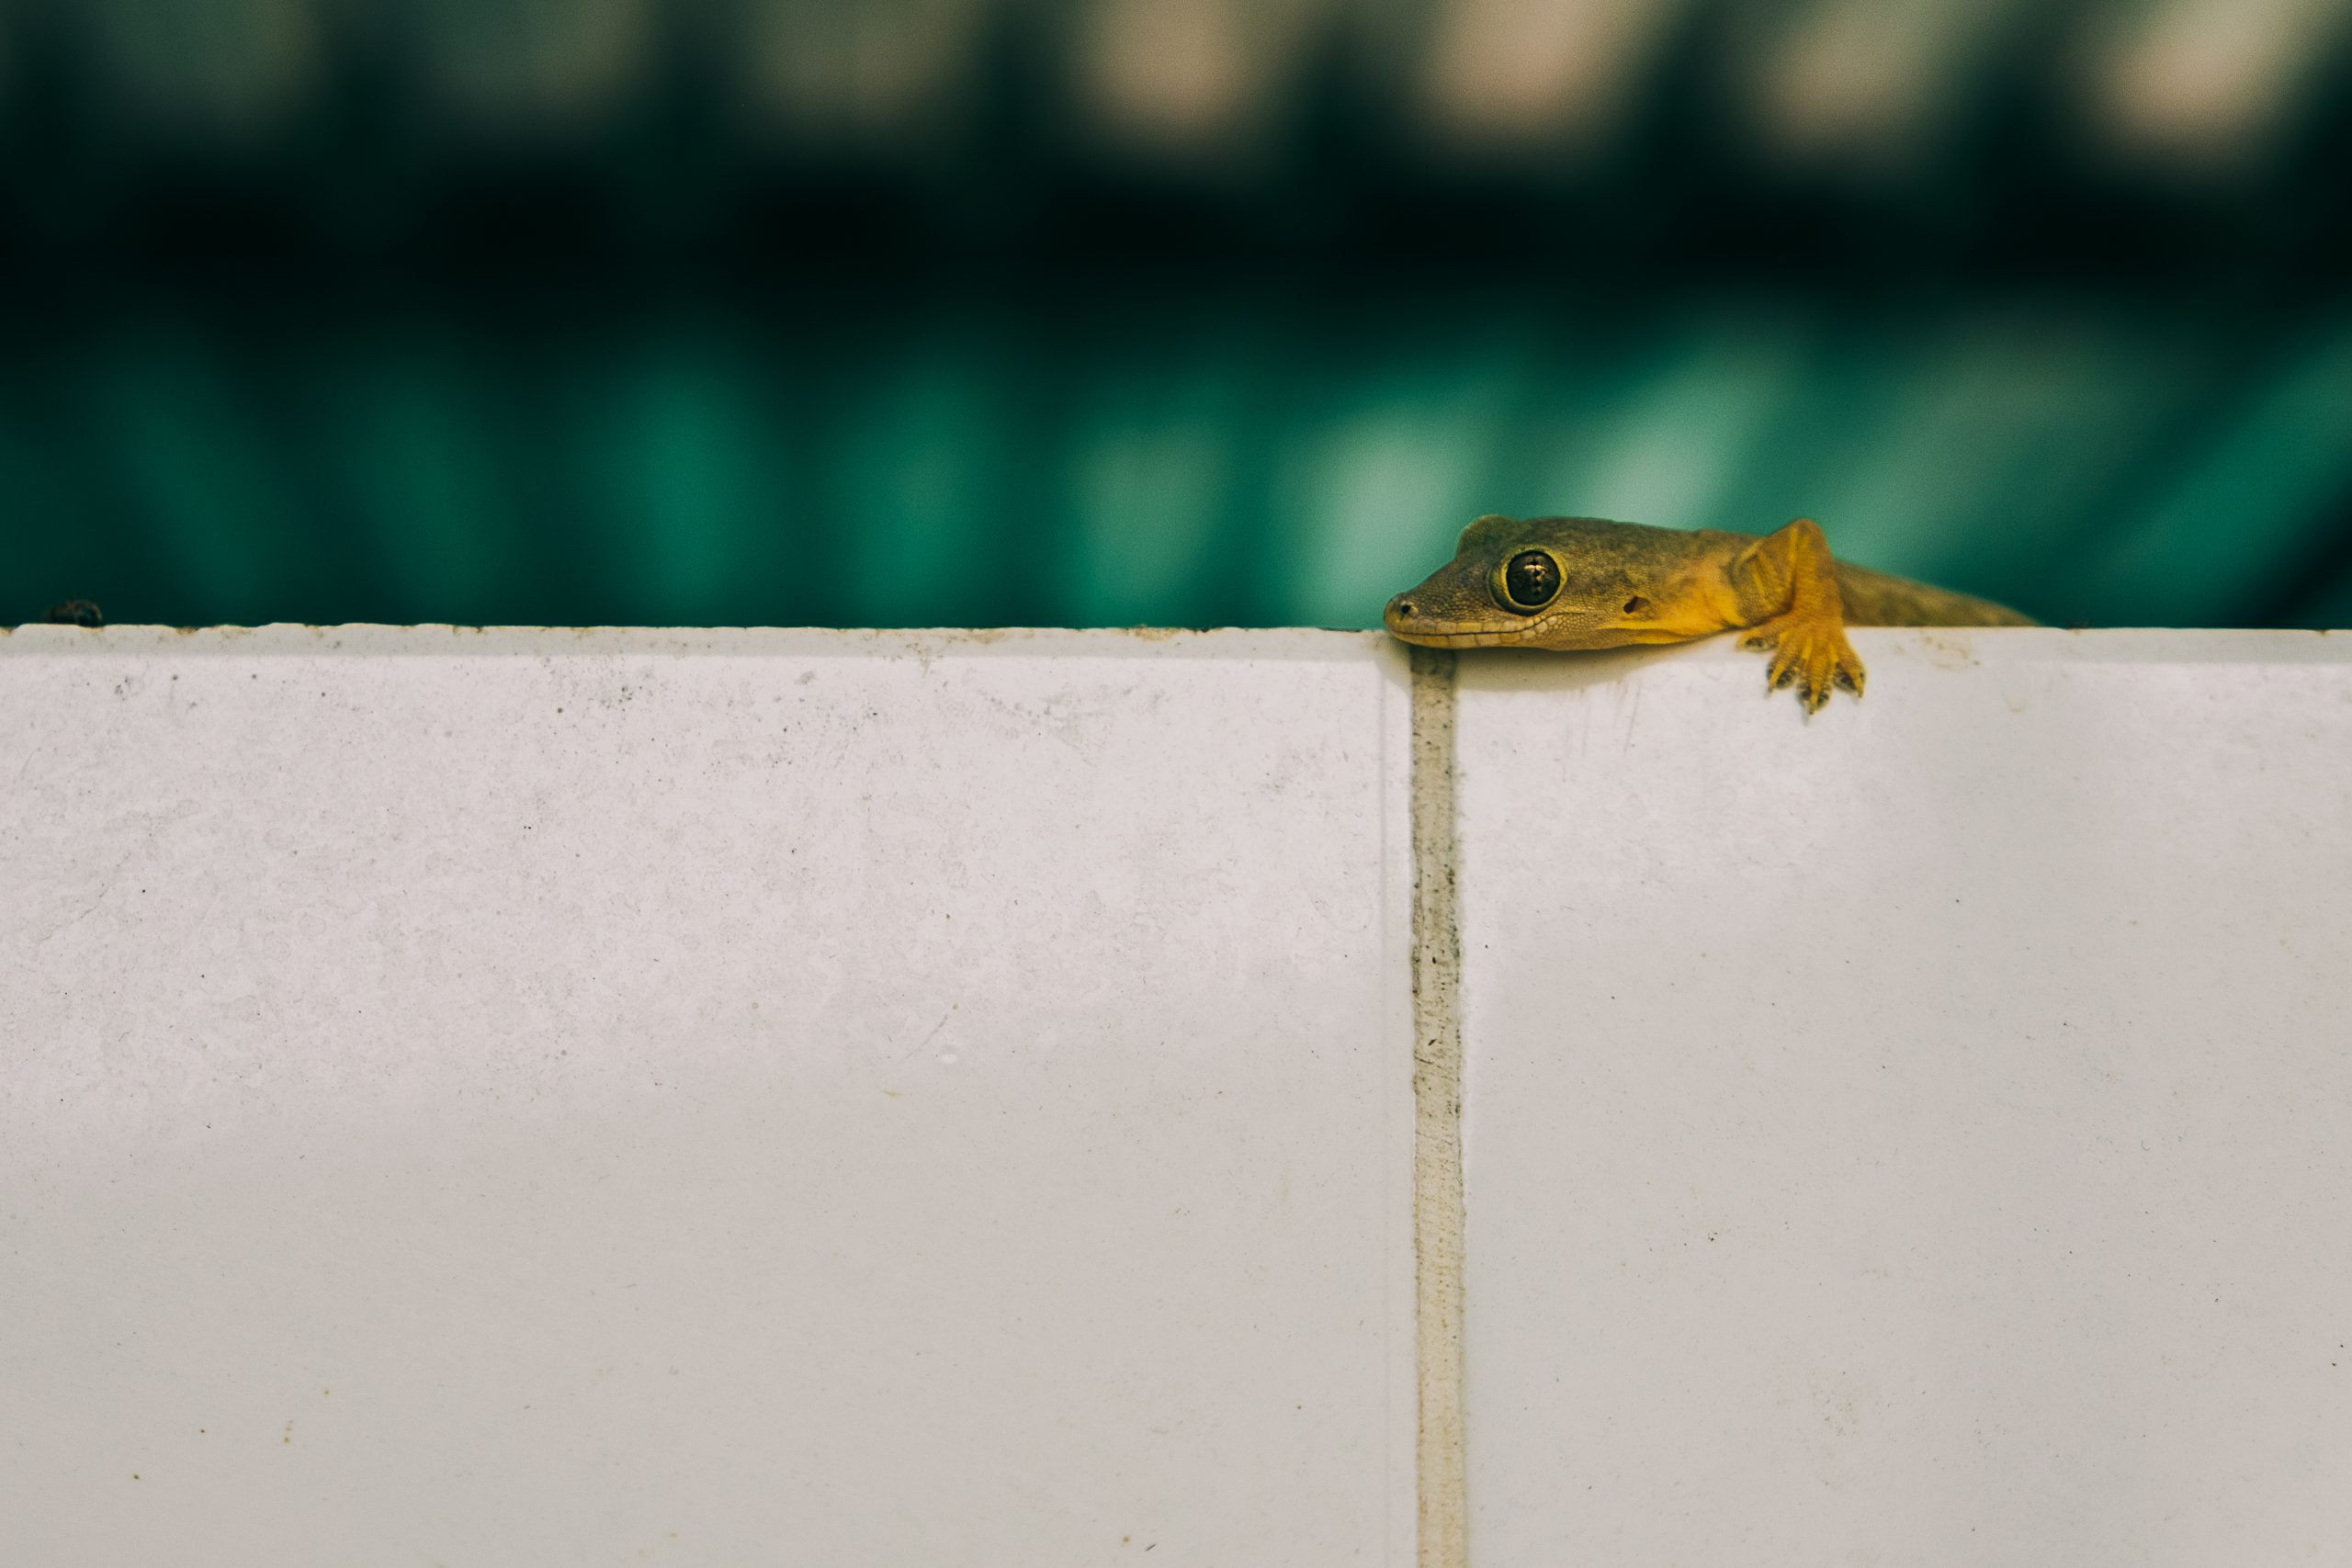 Close up to a house gecko lizard on wall